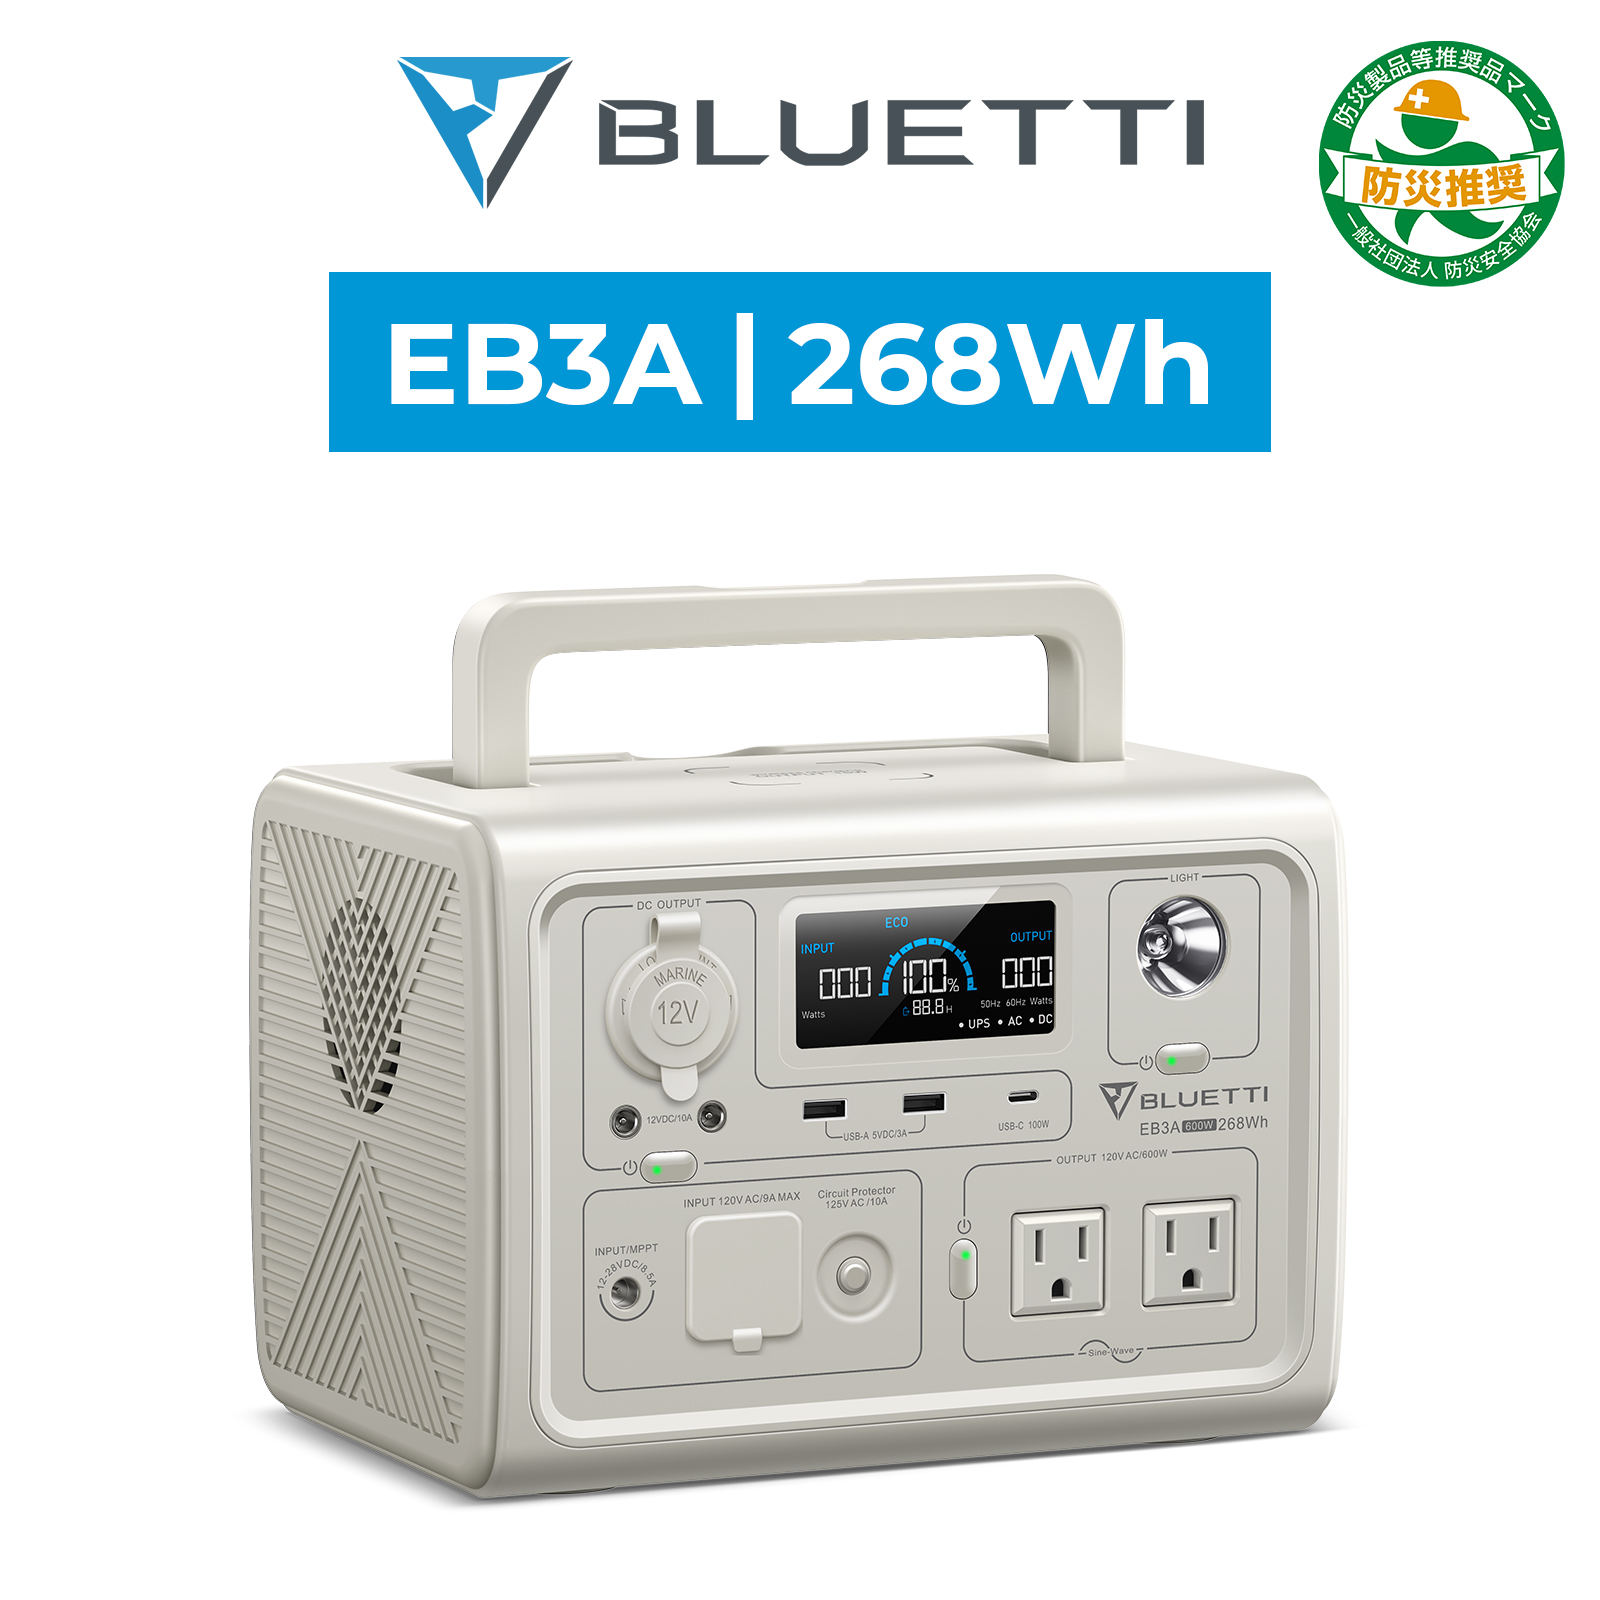 BLUETTI ポータブル電源 EB3A ベージュ 268Wh 600W 軽量 小型 蓄電池 家庭用  リン酸鉄リチウムイオン ポータブルバッテリー  防災 停電 アウトドア キャンプ